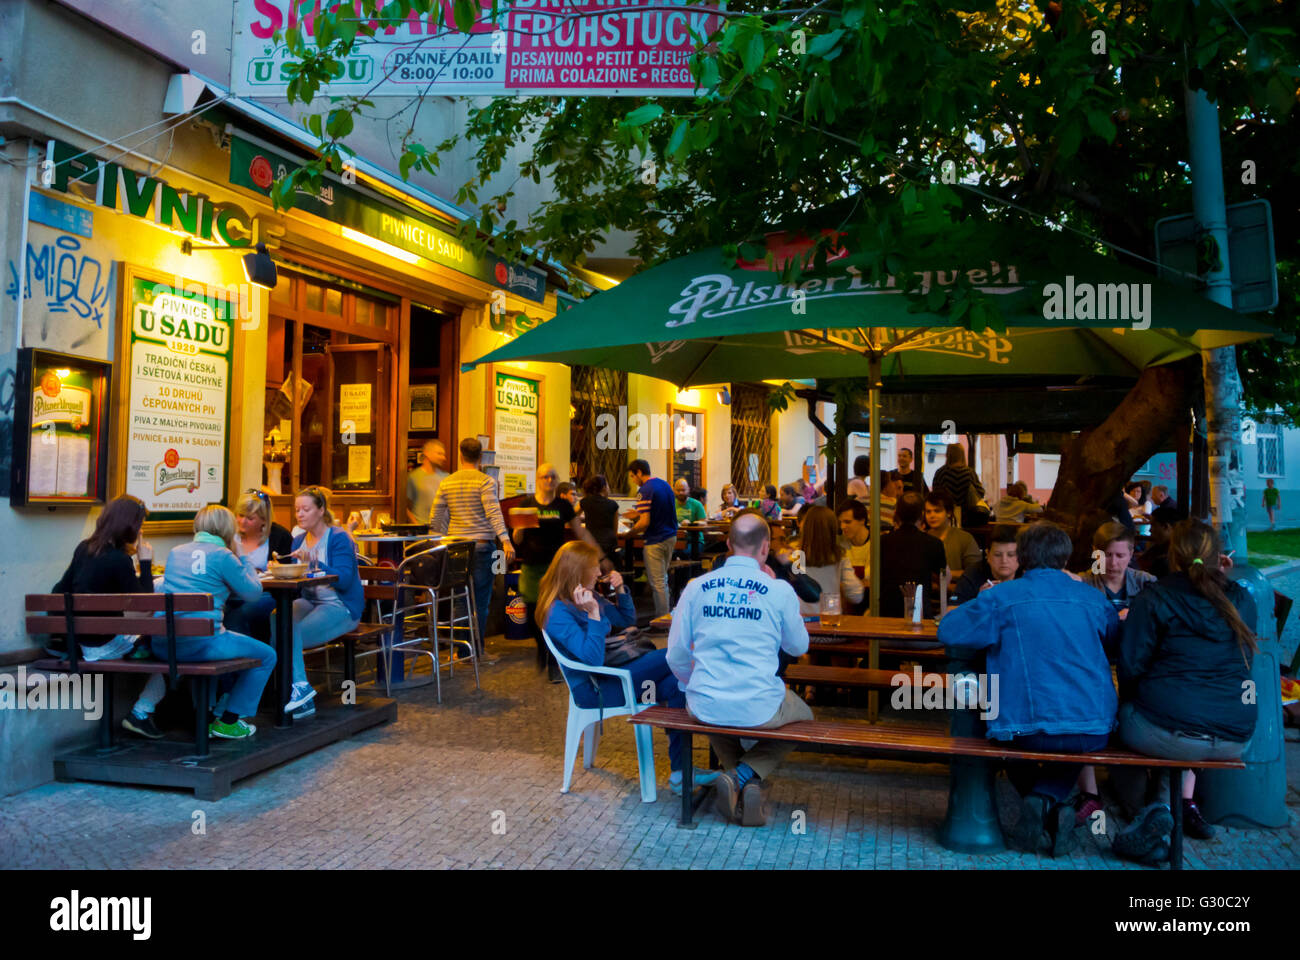 U Sadu, ristorante con grande area esterna, Zizkov, Praga, Repubblica Ceca, Europa Foto Stock